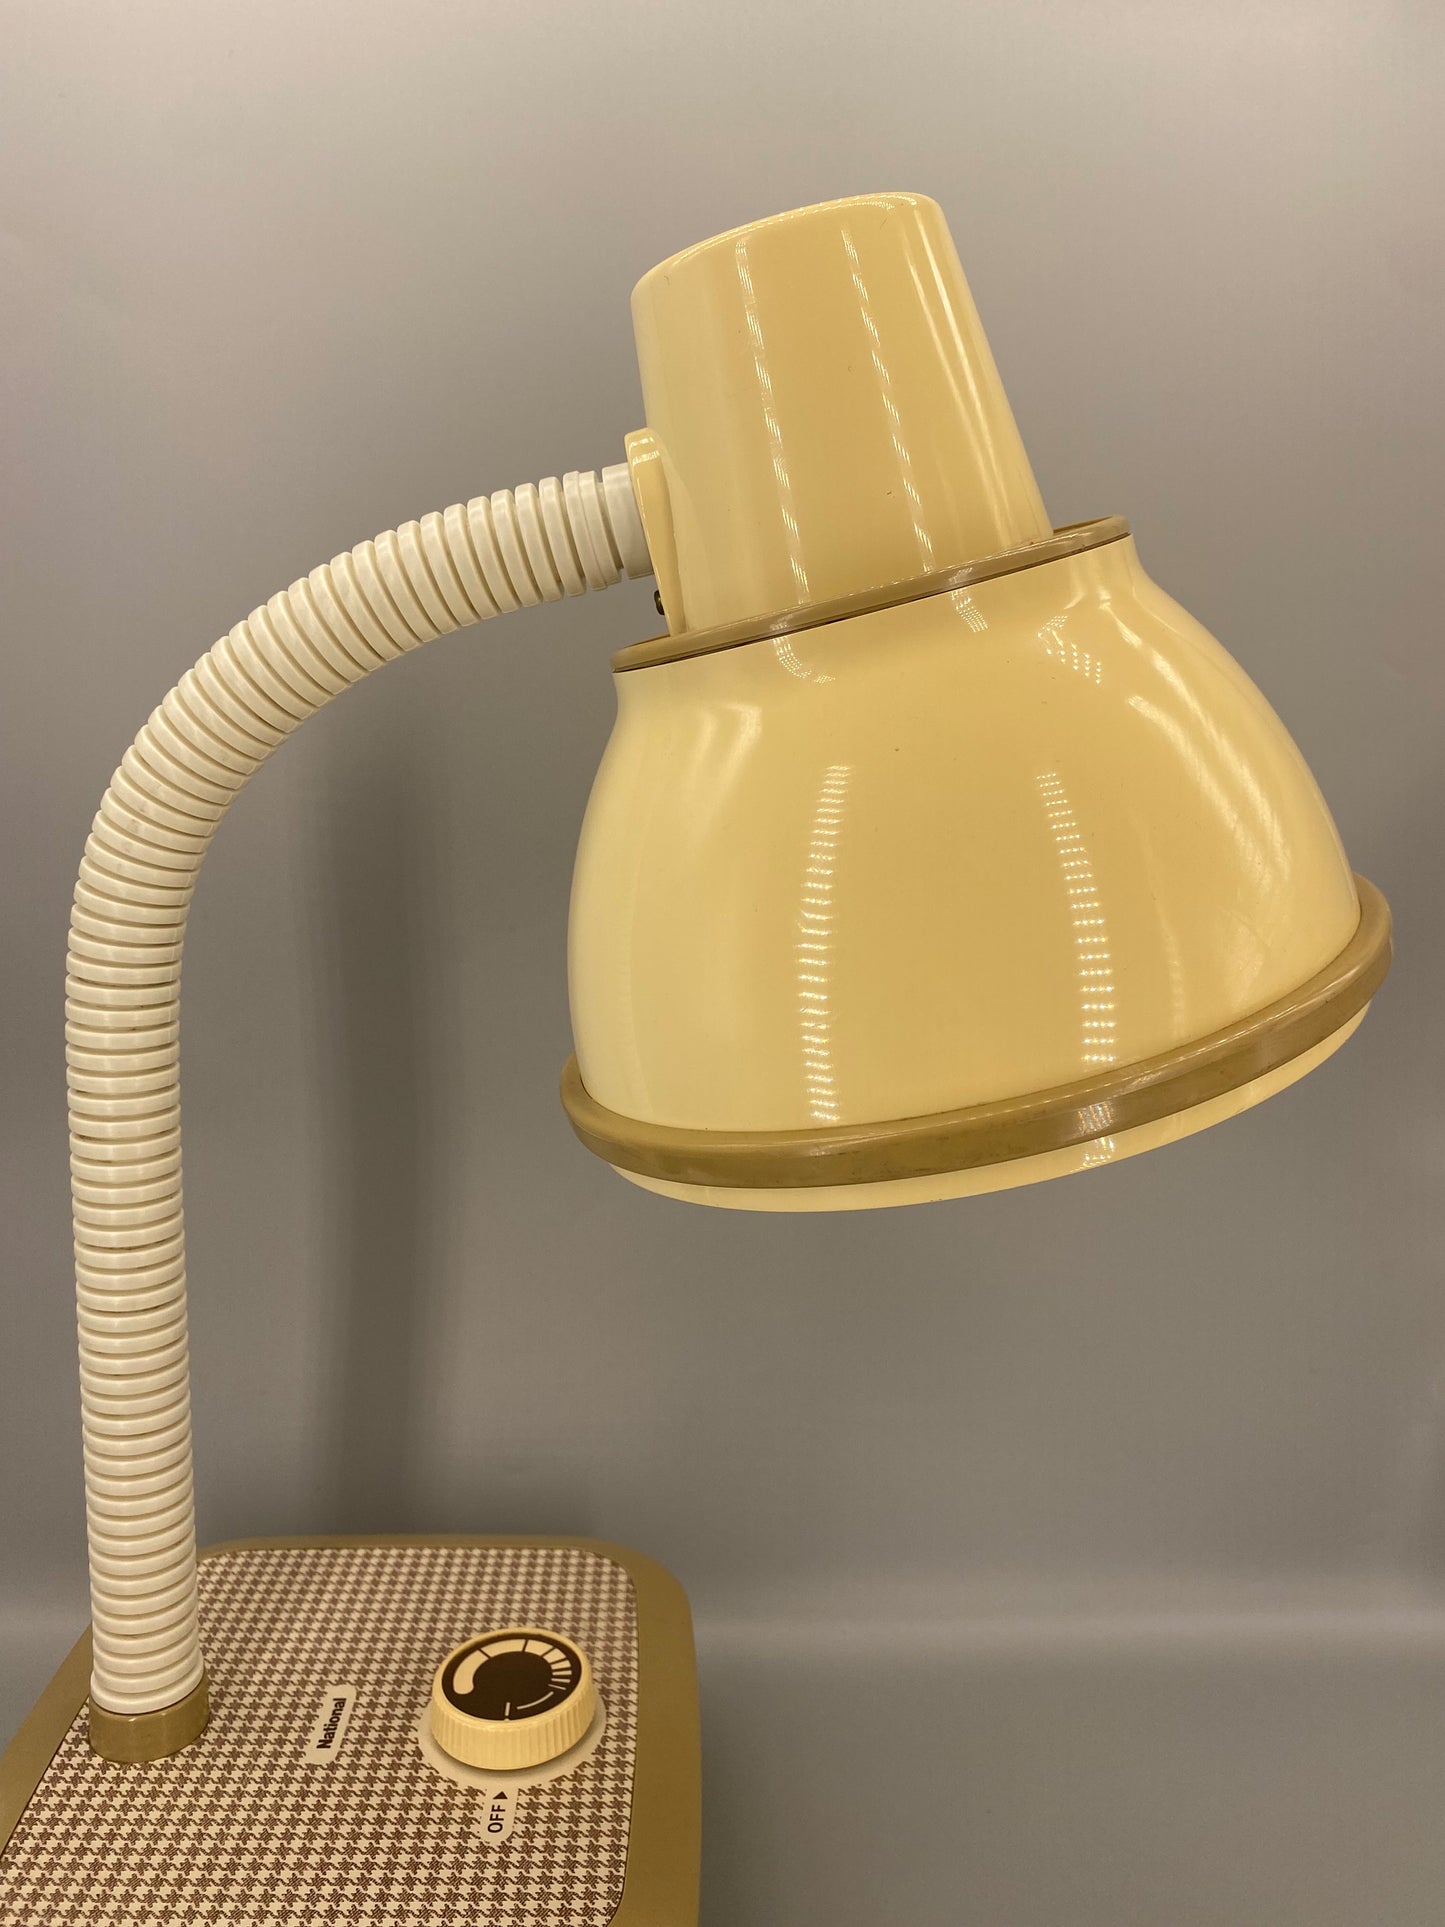 日本制 昭和 National 松下電器 SB603 千鳥格 白熱 擡燈 Table Light Lamp